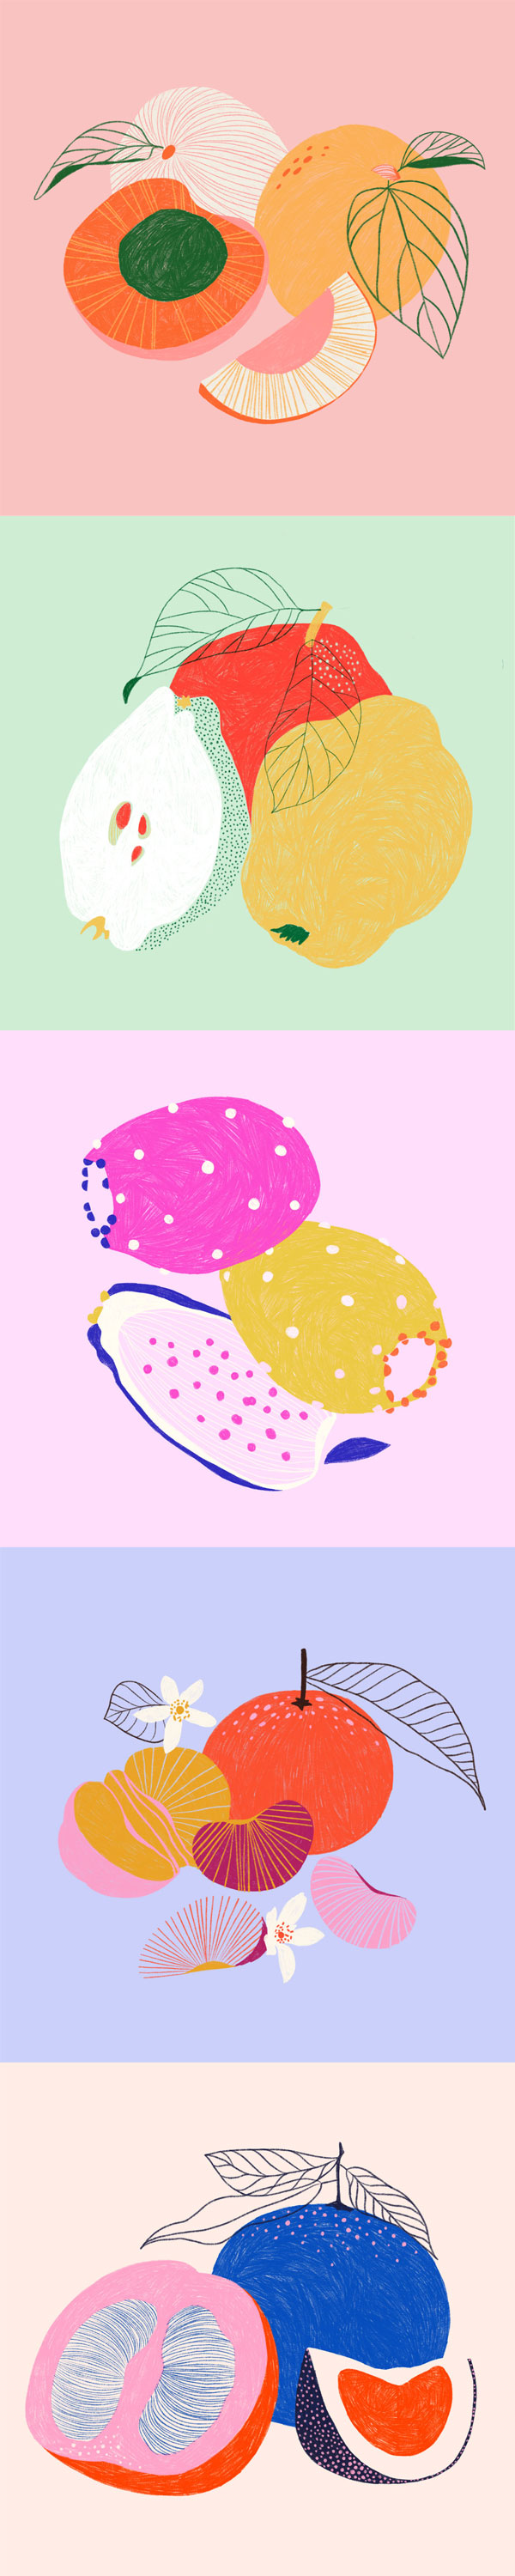 Fruit & Line Series - Marisol Ortega | Illustration